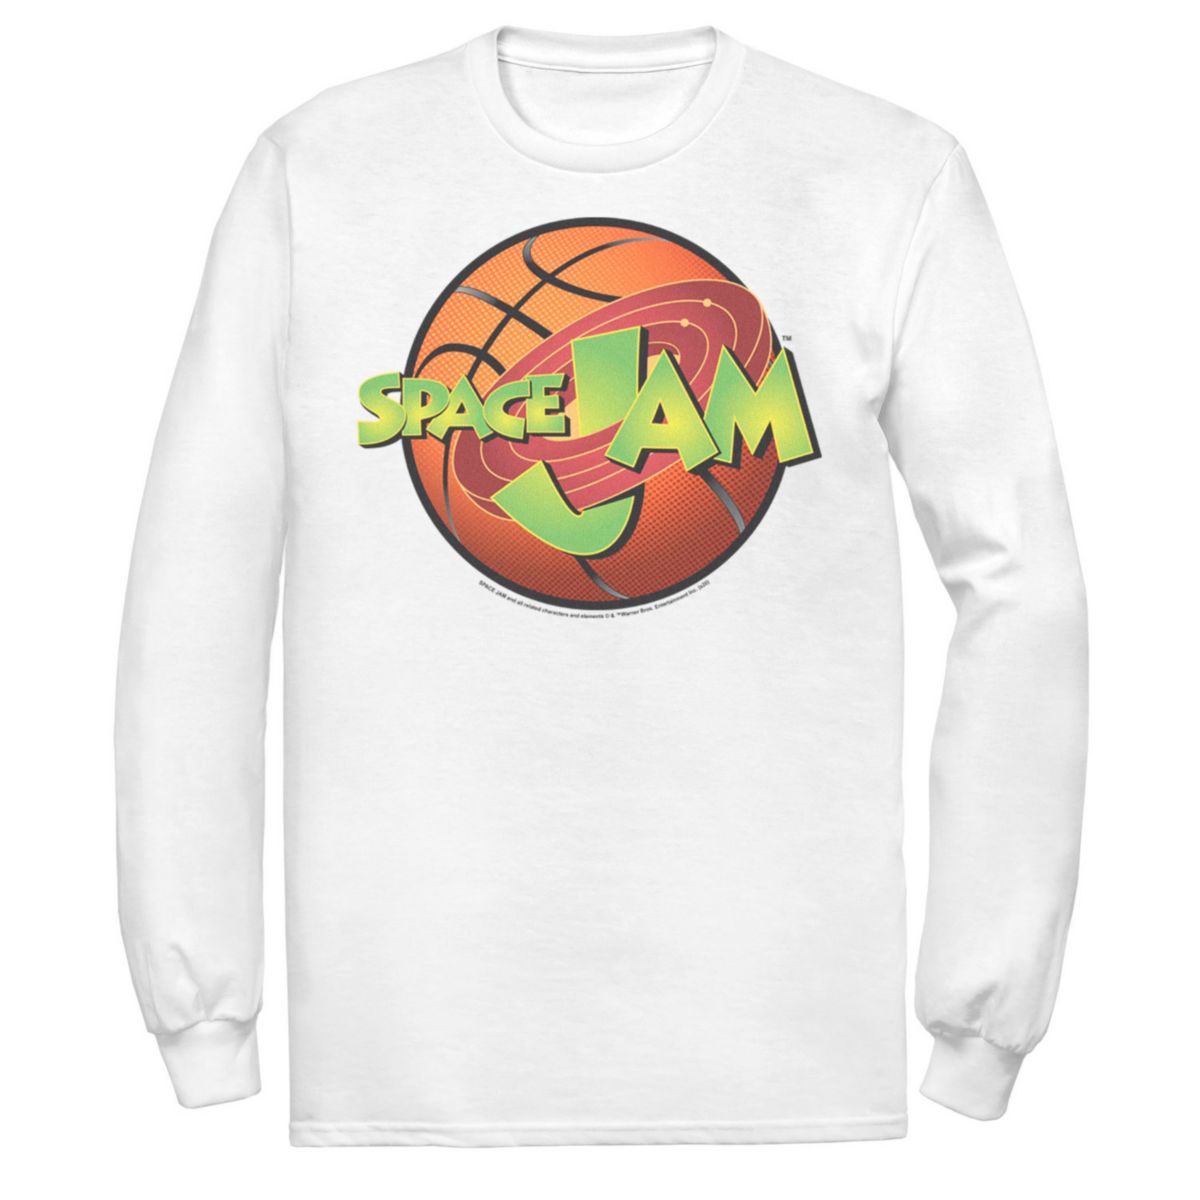 Мужская баскетбольная футболка с логотипом Looney Tunes Space Jam Licensed Character